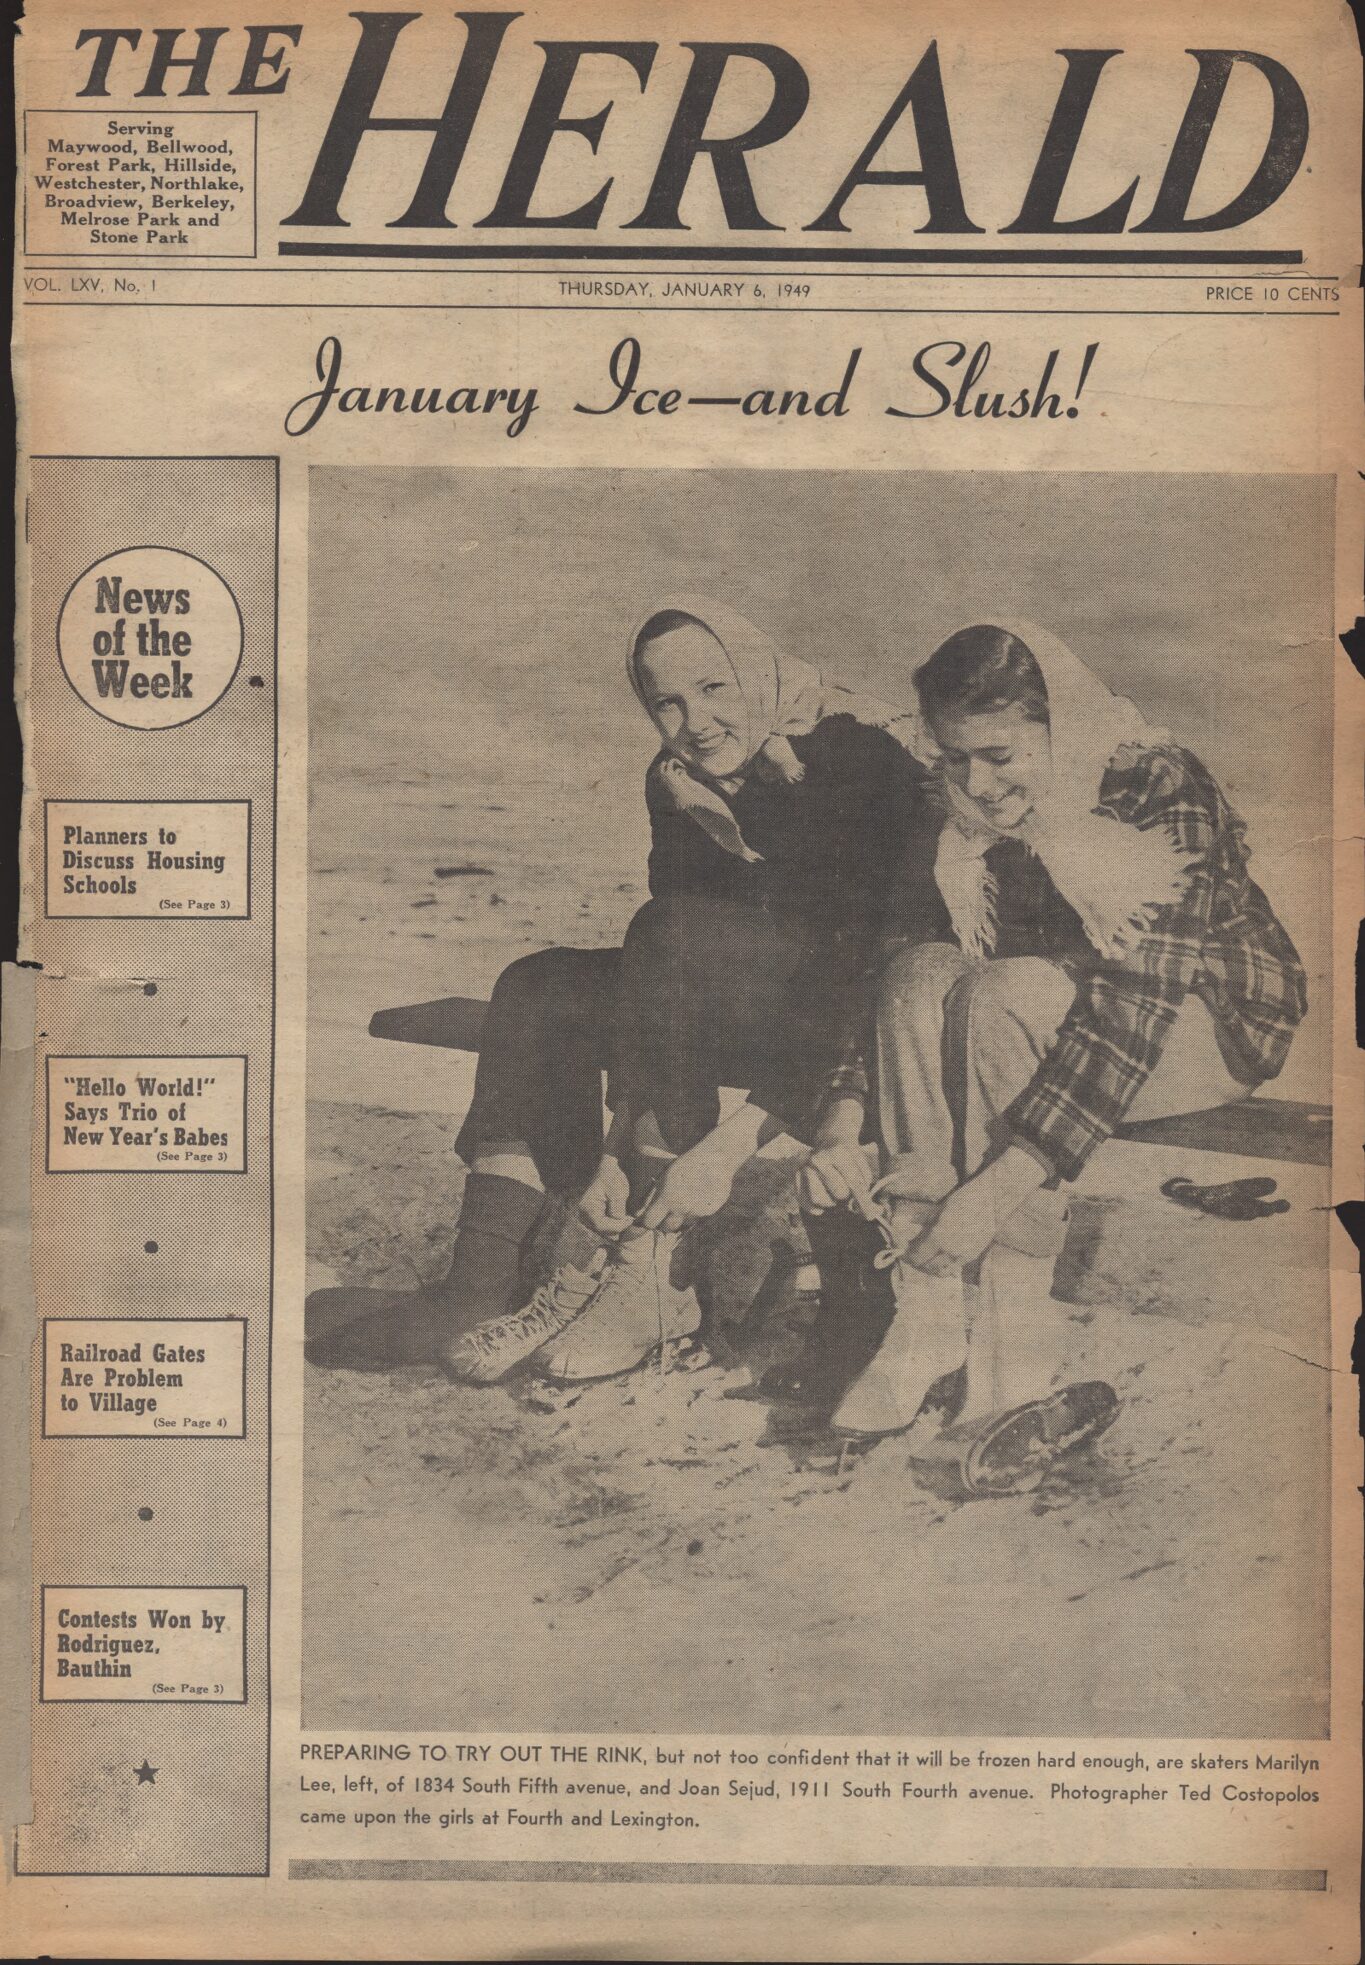 The Herald – 19490106